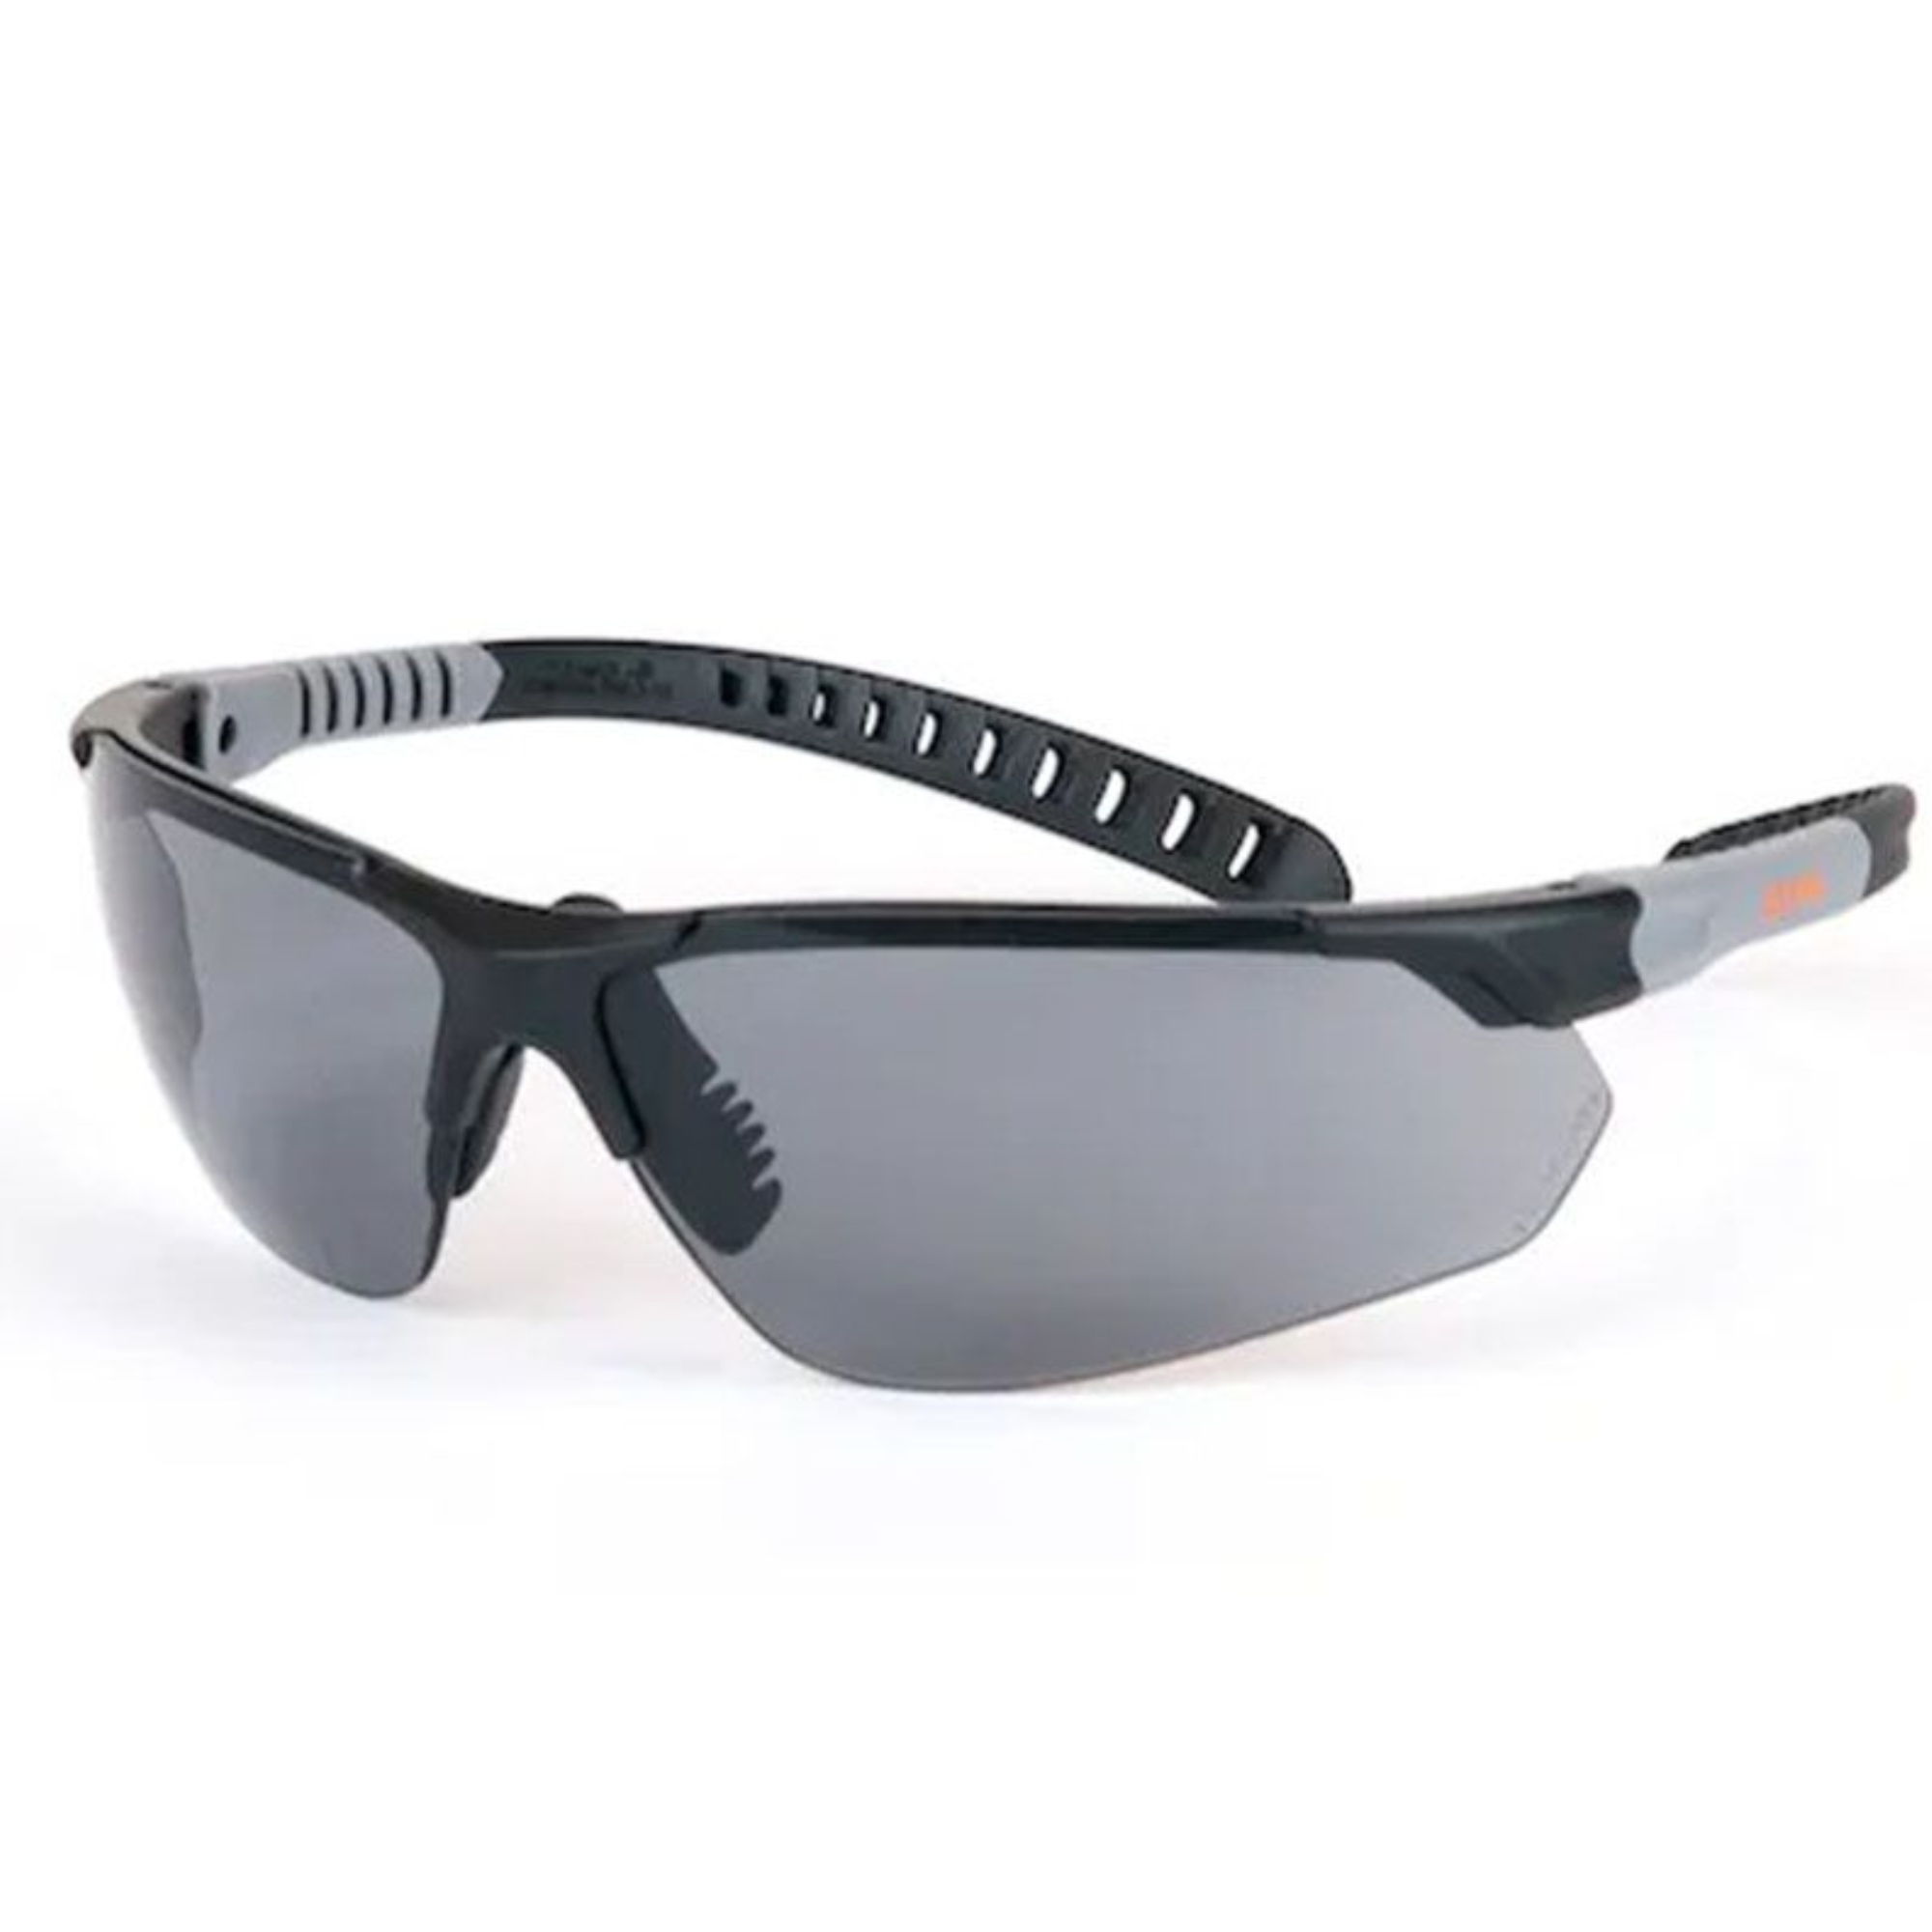 Stihl Adjustable Protective Glasses | Black/Gray Frame | 7010 886 1201